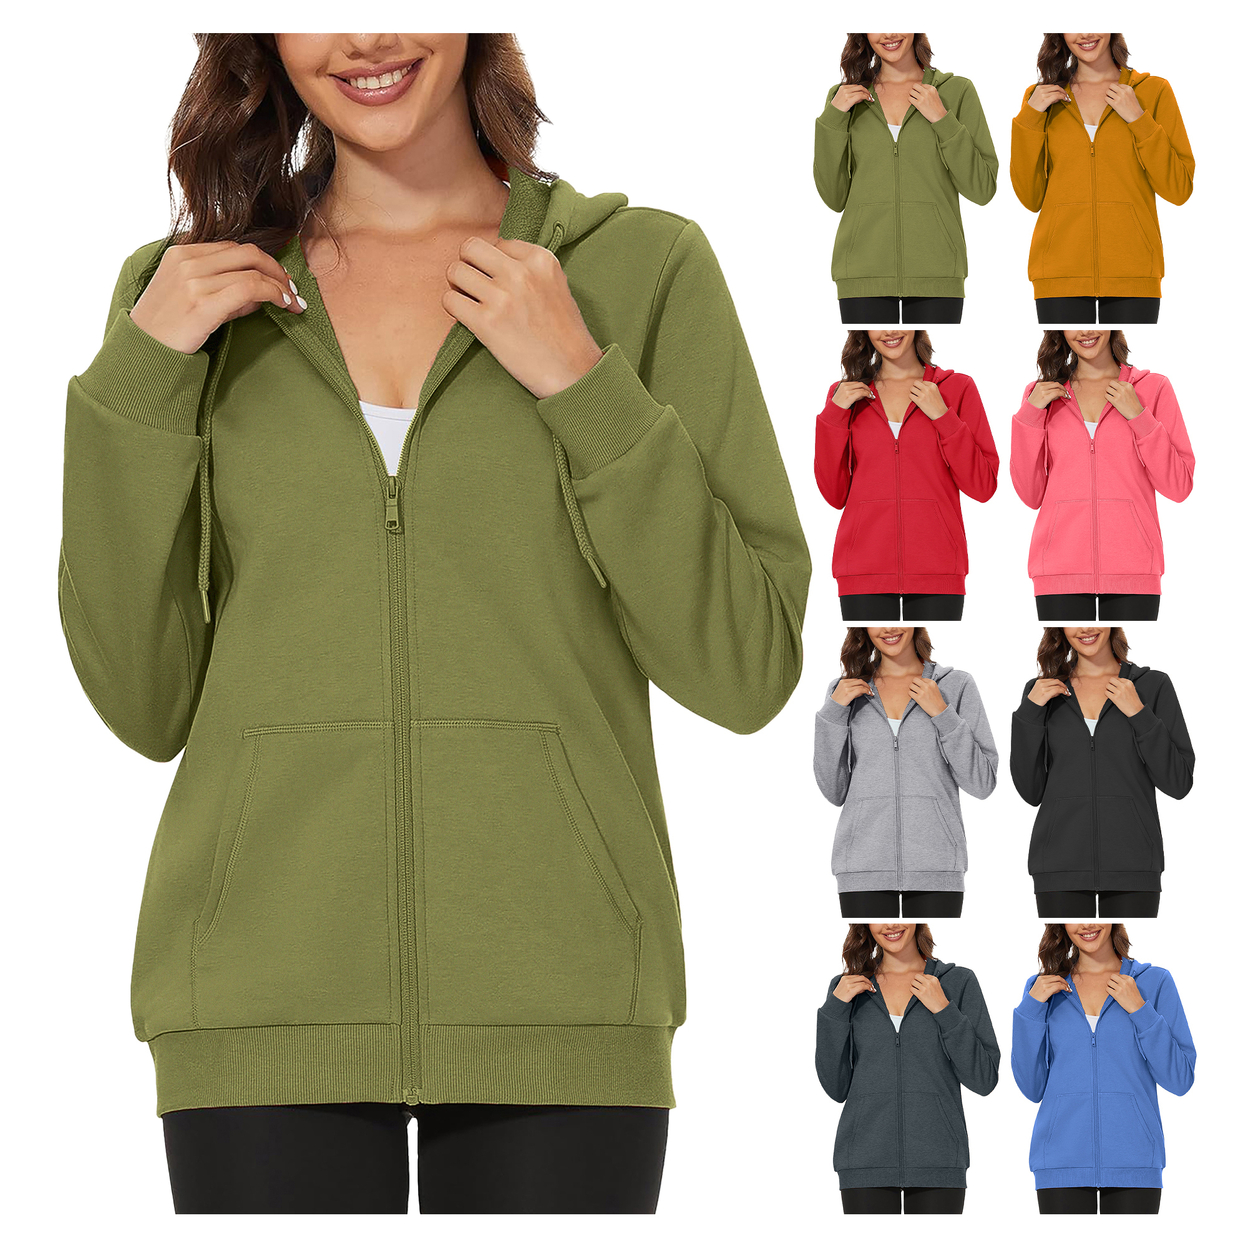 2-Pack: Women's Winter Warm Soft Blend Fleece Lined Full Zip Up Hoodie - Black & Olive, Xx-large